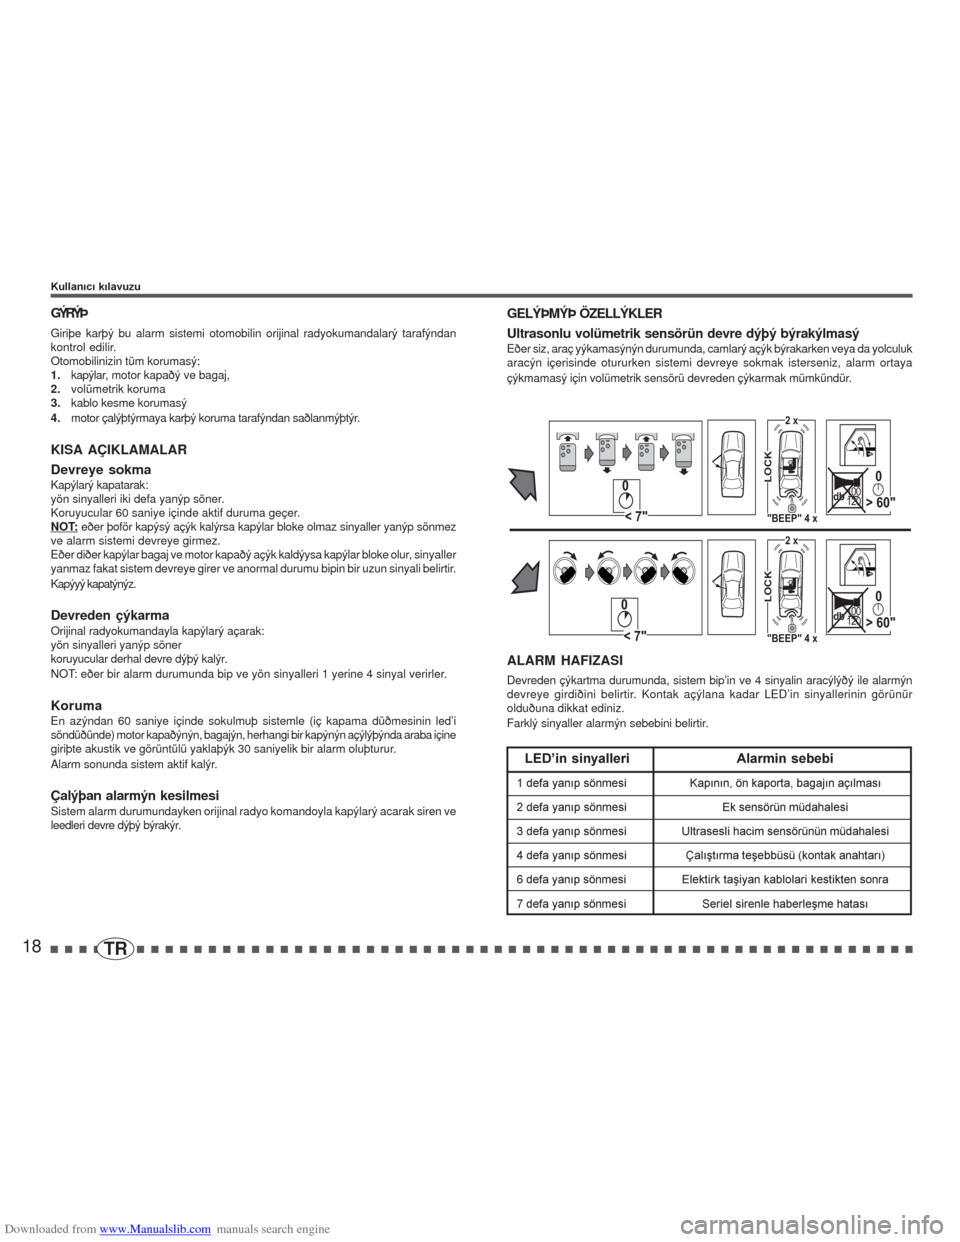 RENAULT ESPACE 2002 J66 / 3.G Alarm 7895-7897 User Guide Downloaded from www.Manualslib.com manuals search engine 18TR
GÝRÝÞ
Giriþe karþý bu alarm sistemi otomobilin orijinal radyokumandalarý tarafýndan
kontrol edilir.
Otomobilinizin tüm korumasý: